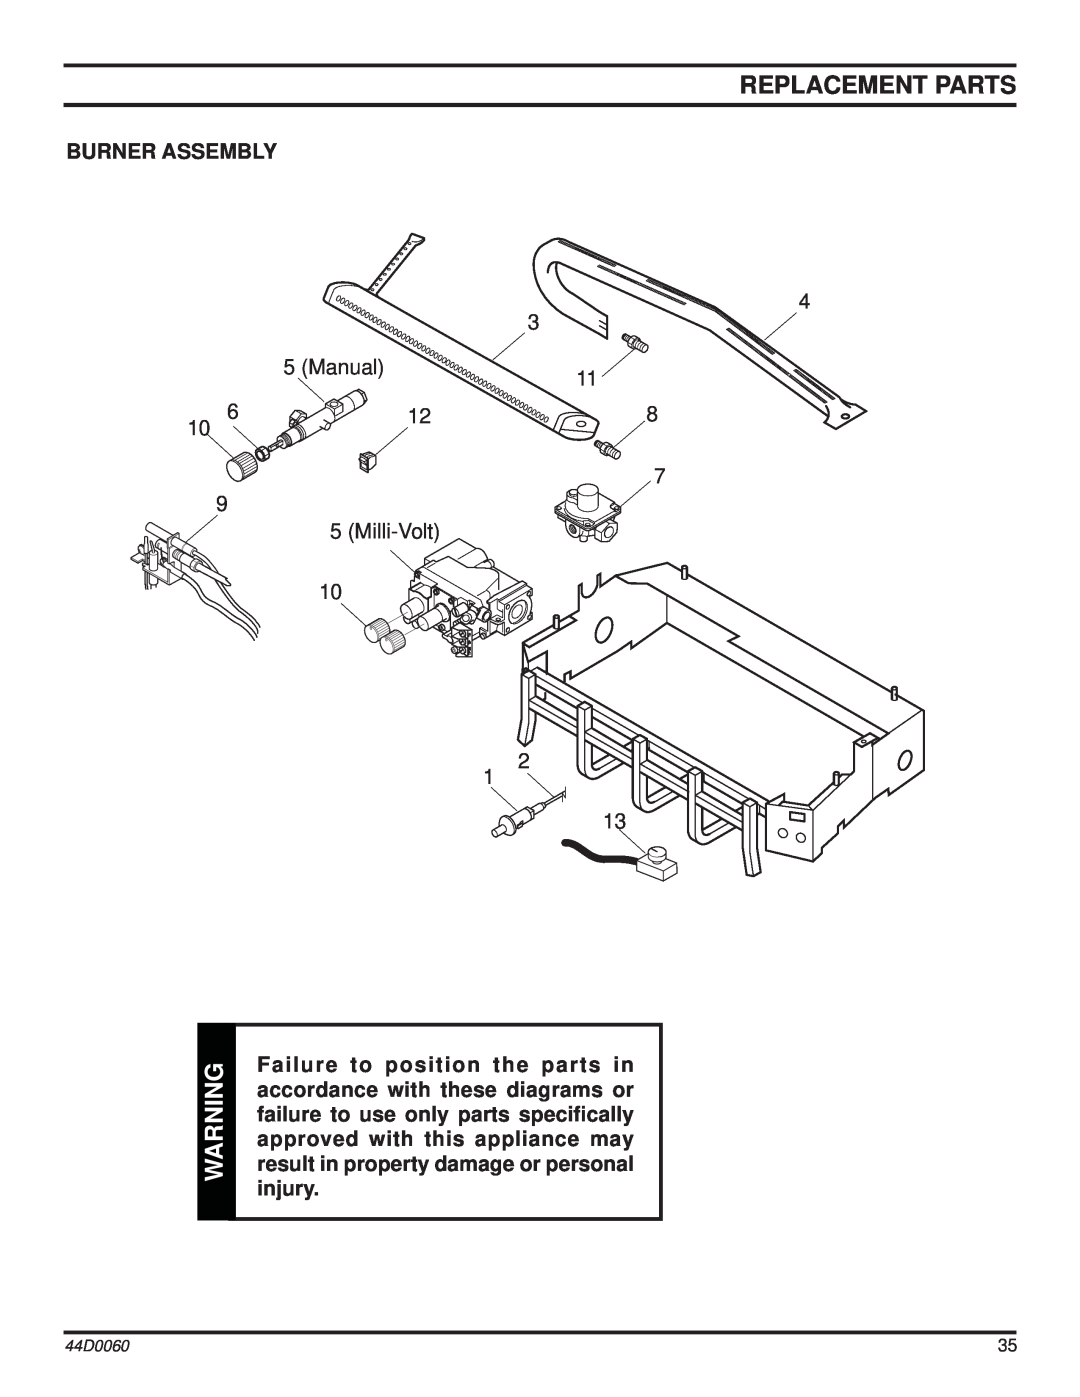 Monessen Hearth DEB30, DEB20 manual Replacement Parts, Burner Assembly 